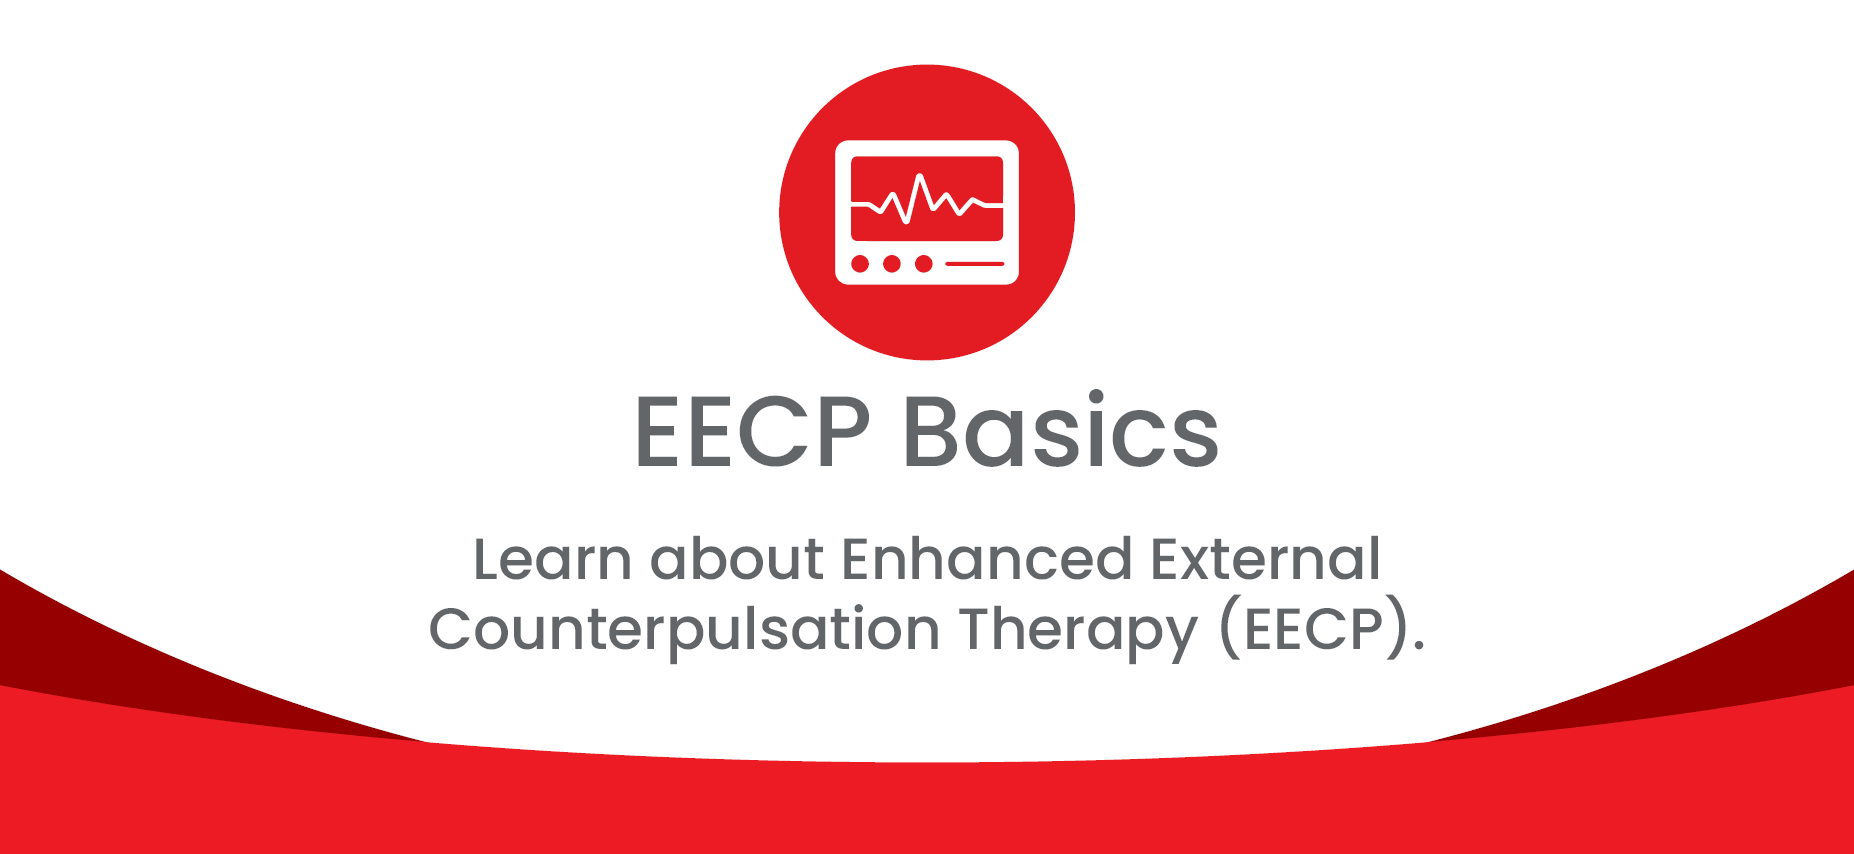 EECP Basics